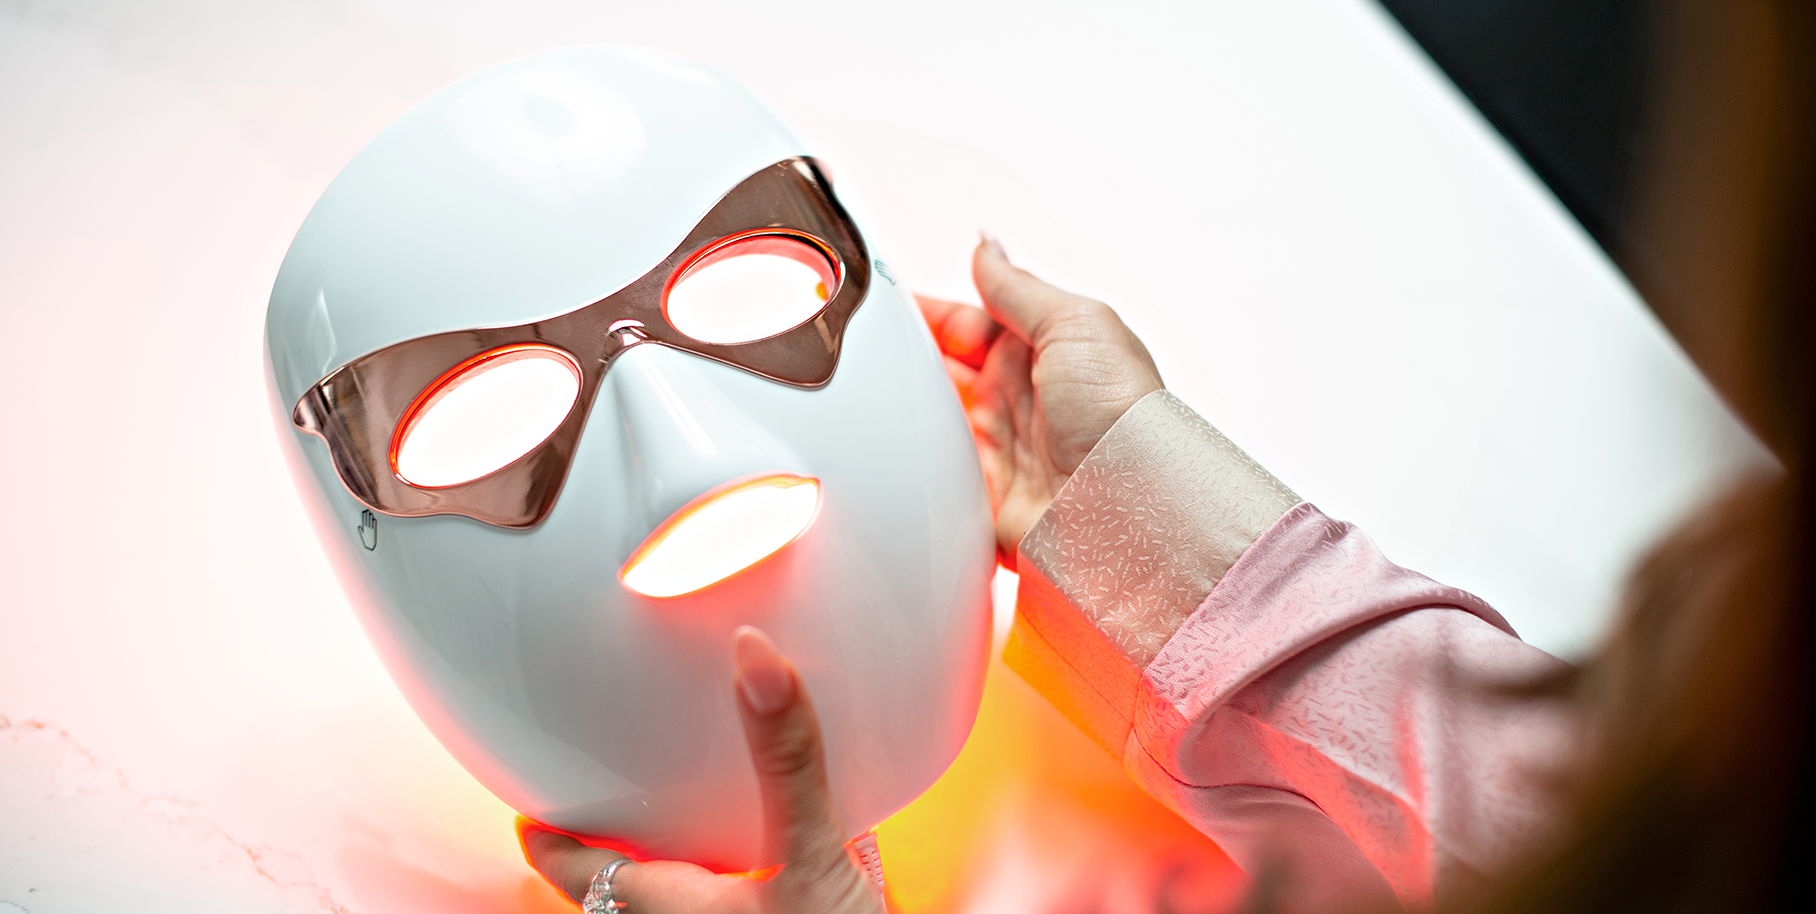 Sophie Elise Isachsen with Silkemyk's LED mask